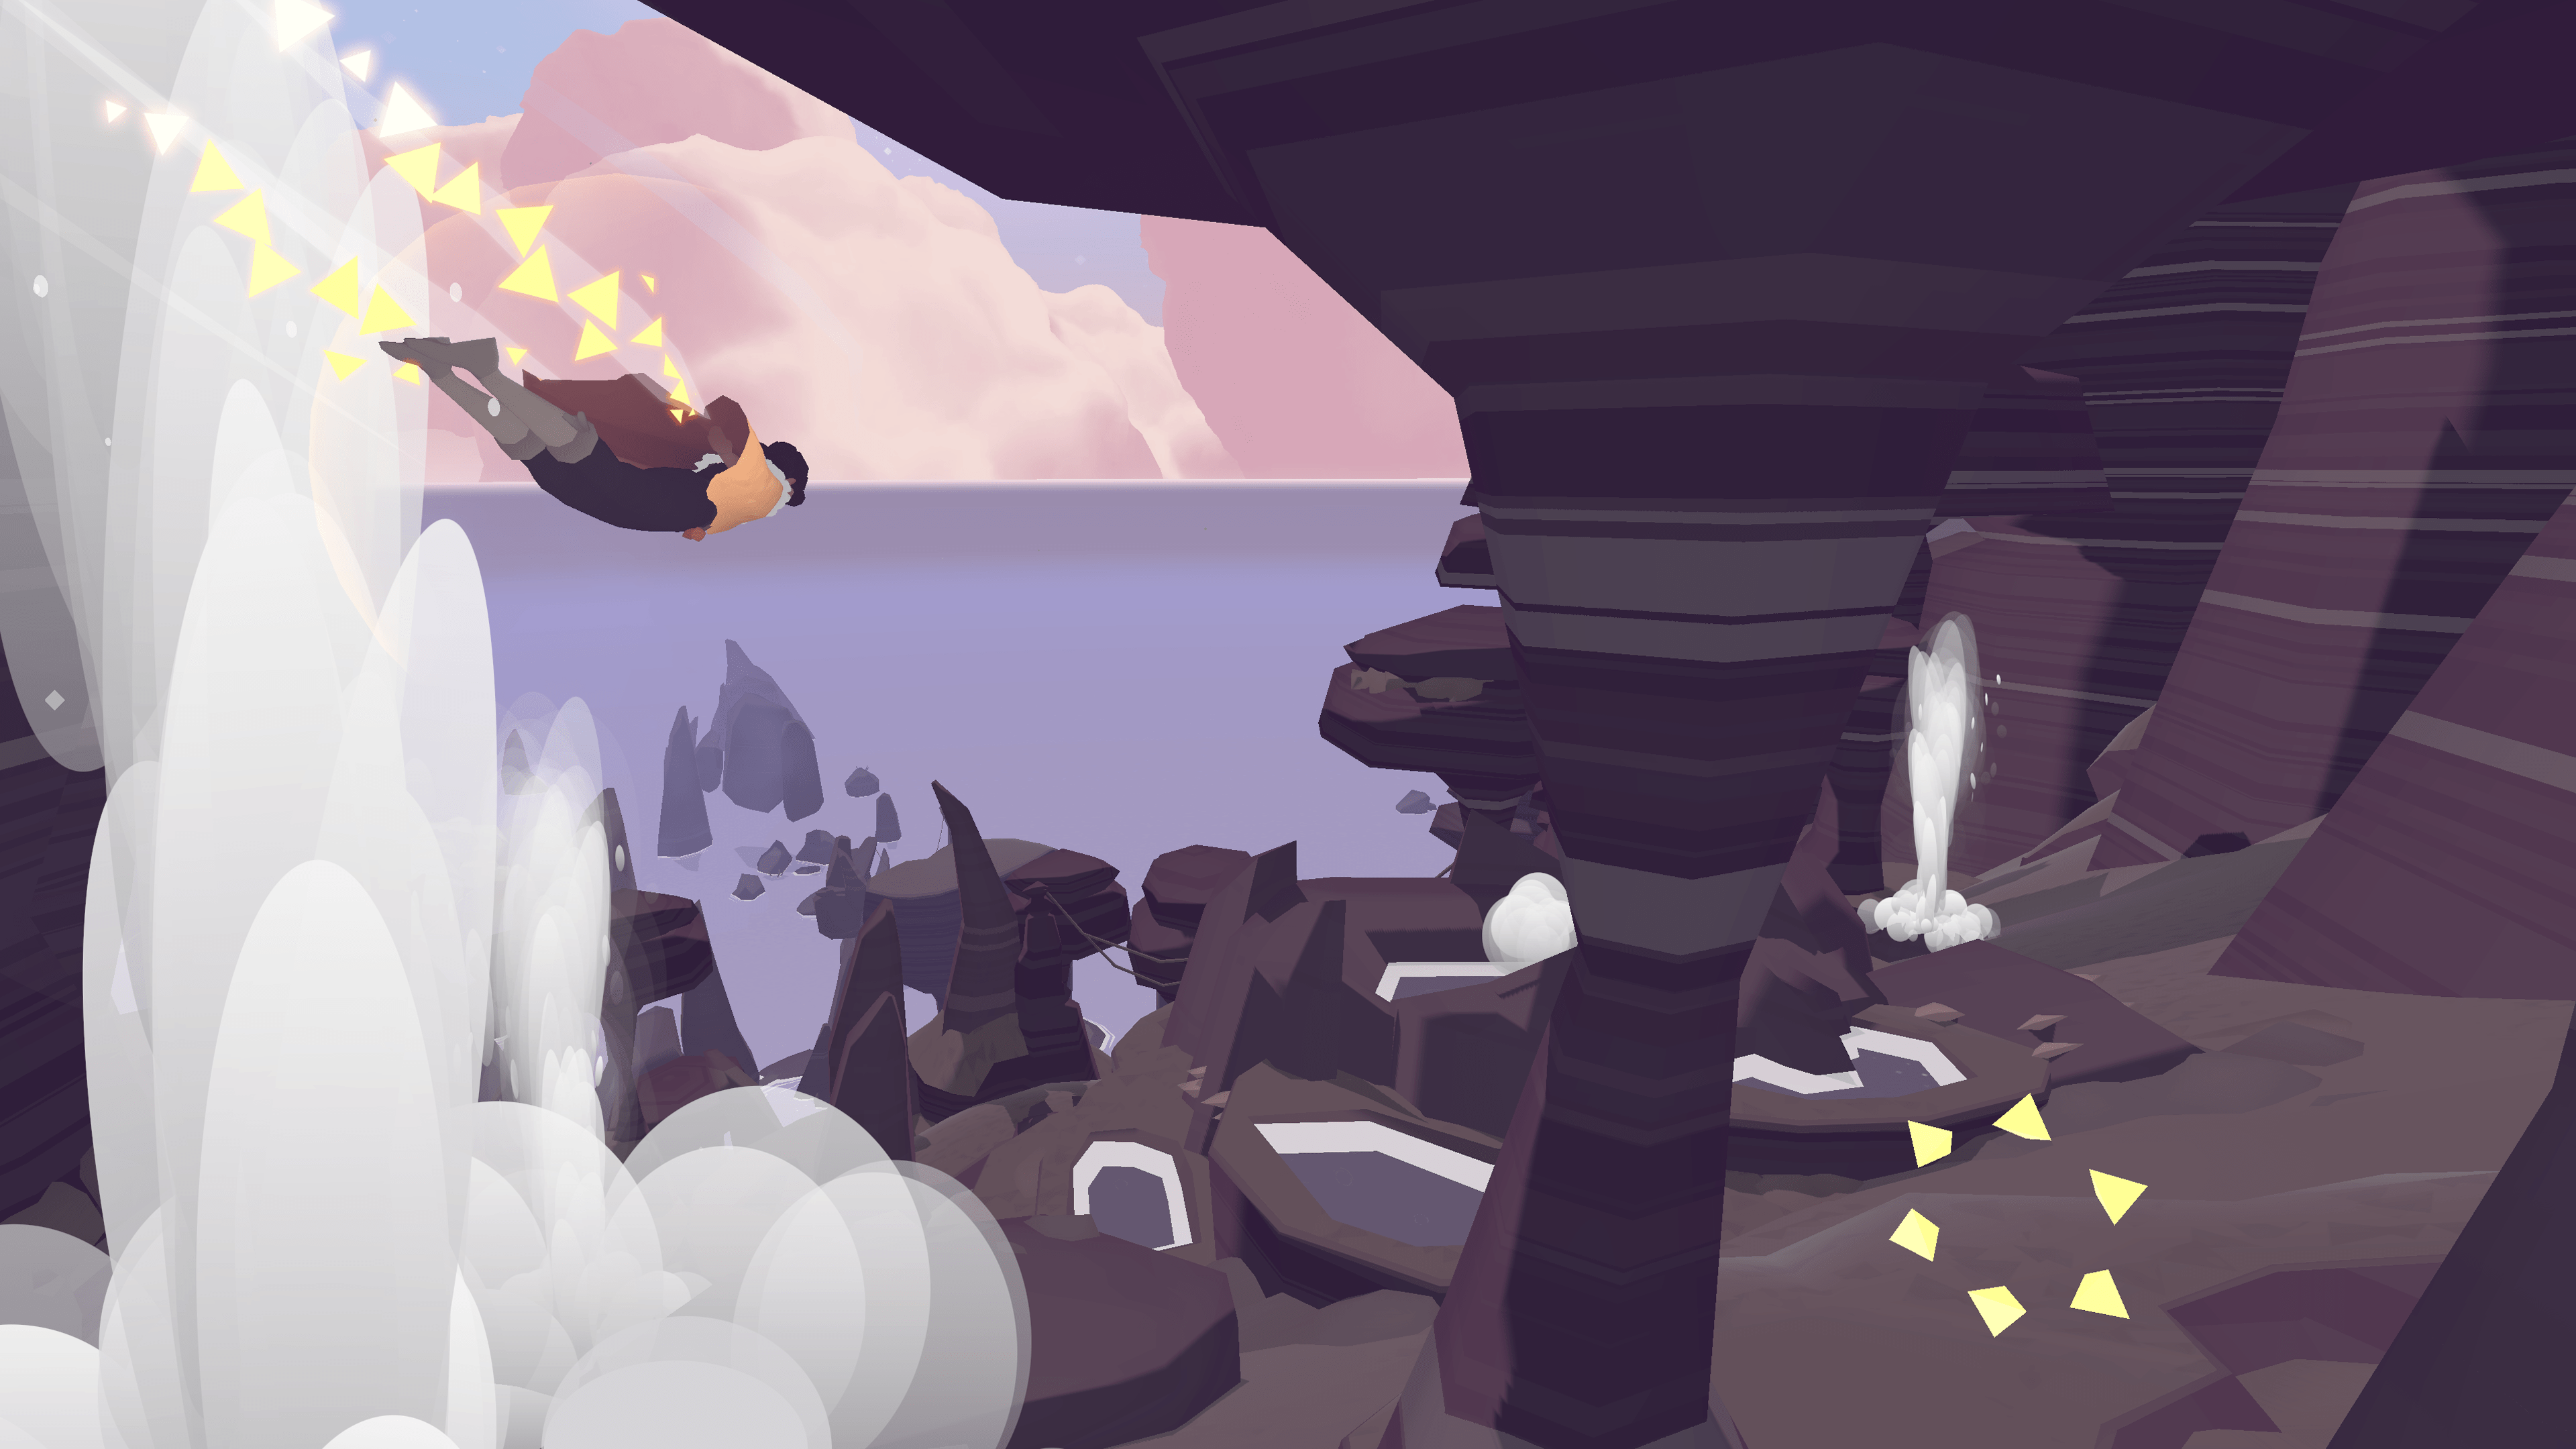 mage of Laya's Horizon gameplay of a character soaring through mountains